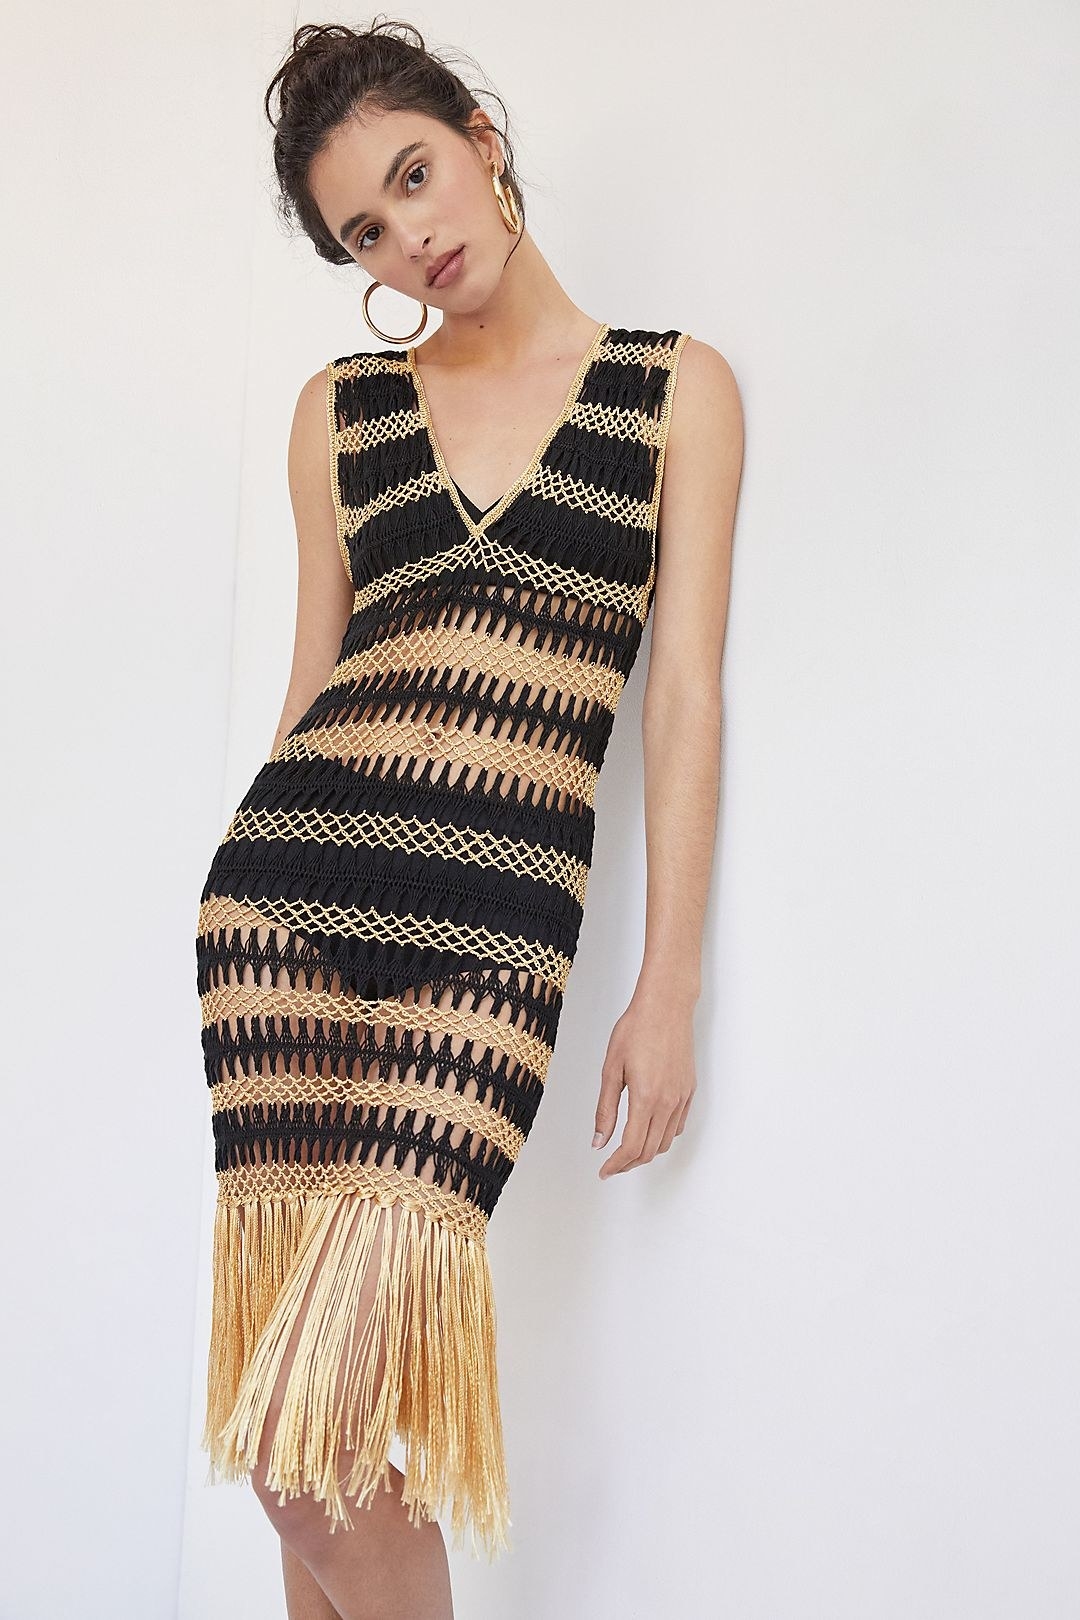 a model wears the fringed crochet cover up over a black bikini